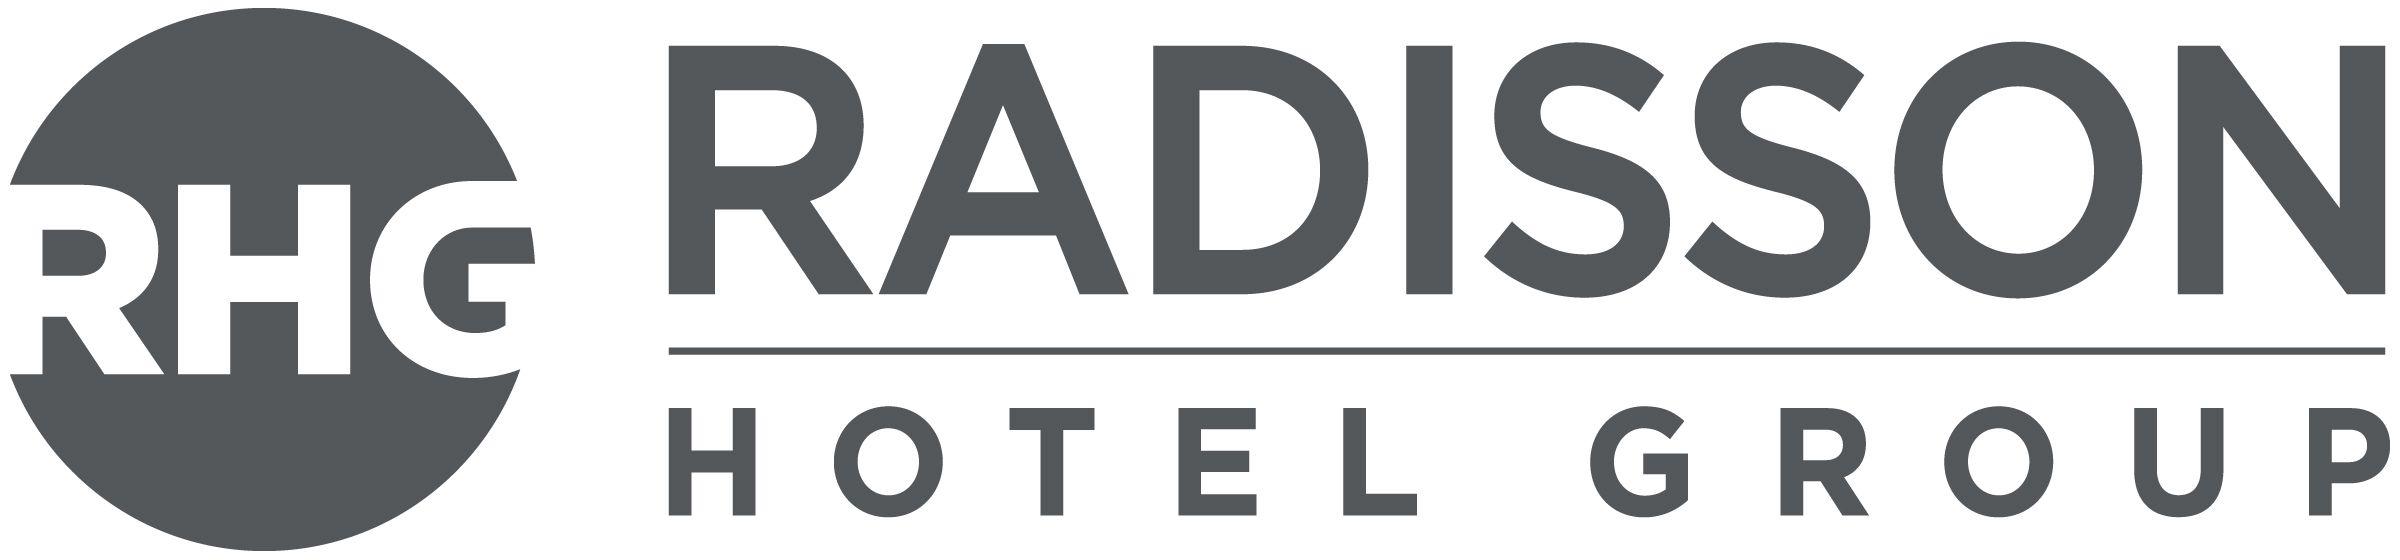 Radisson Logo - MEDIA KIT